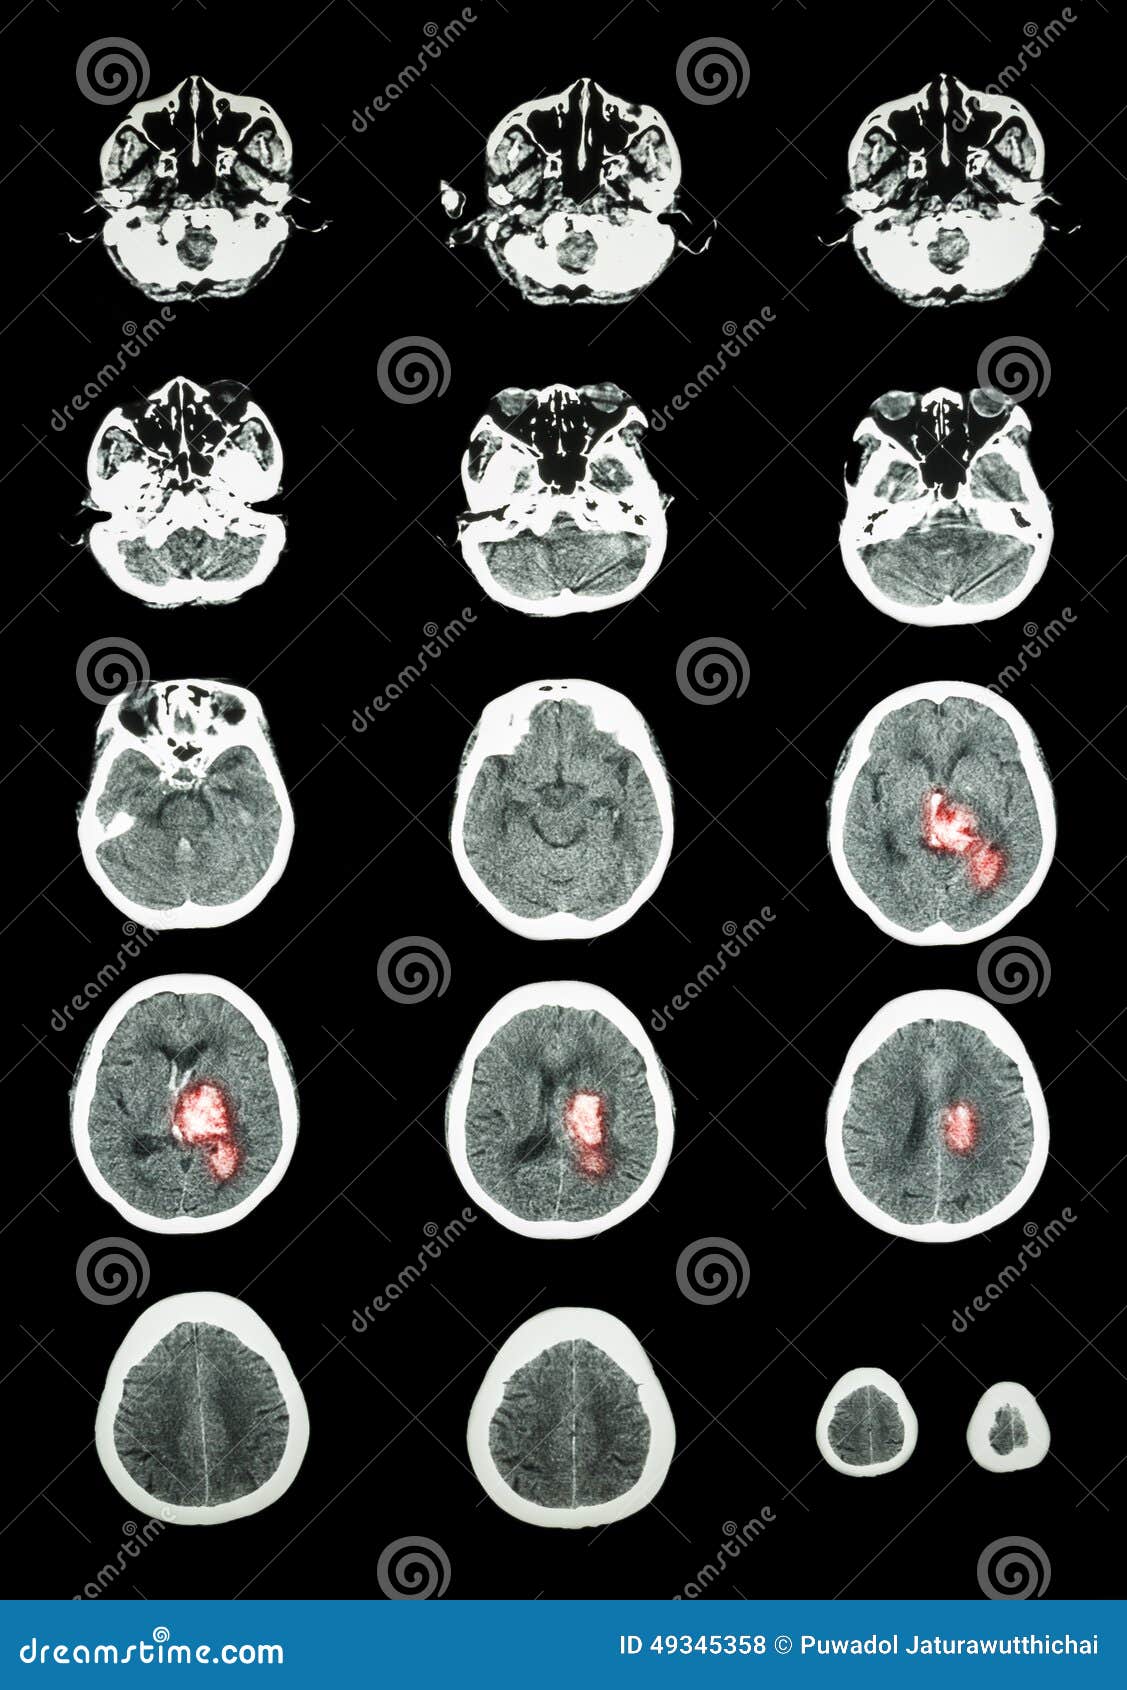 hemorrhagic stroke . ct scan (computed tomography) of brain ( c